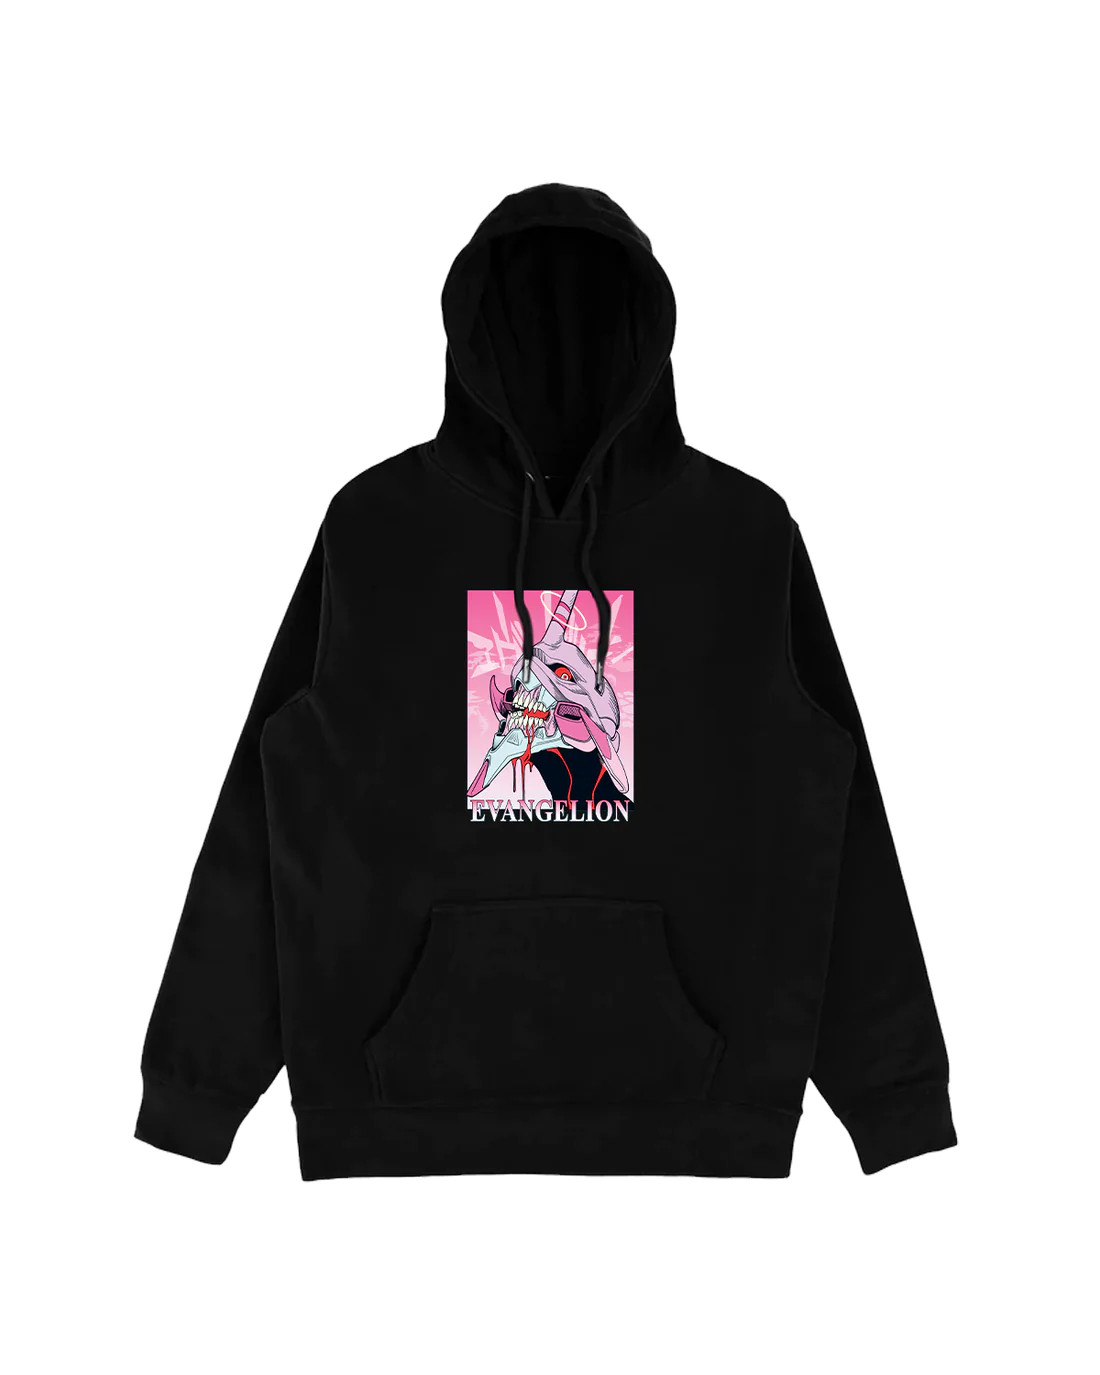 Evangelion Hoodies – EVA Pink Graphic Anime Pullover Hoodie - Evangelion Merch